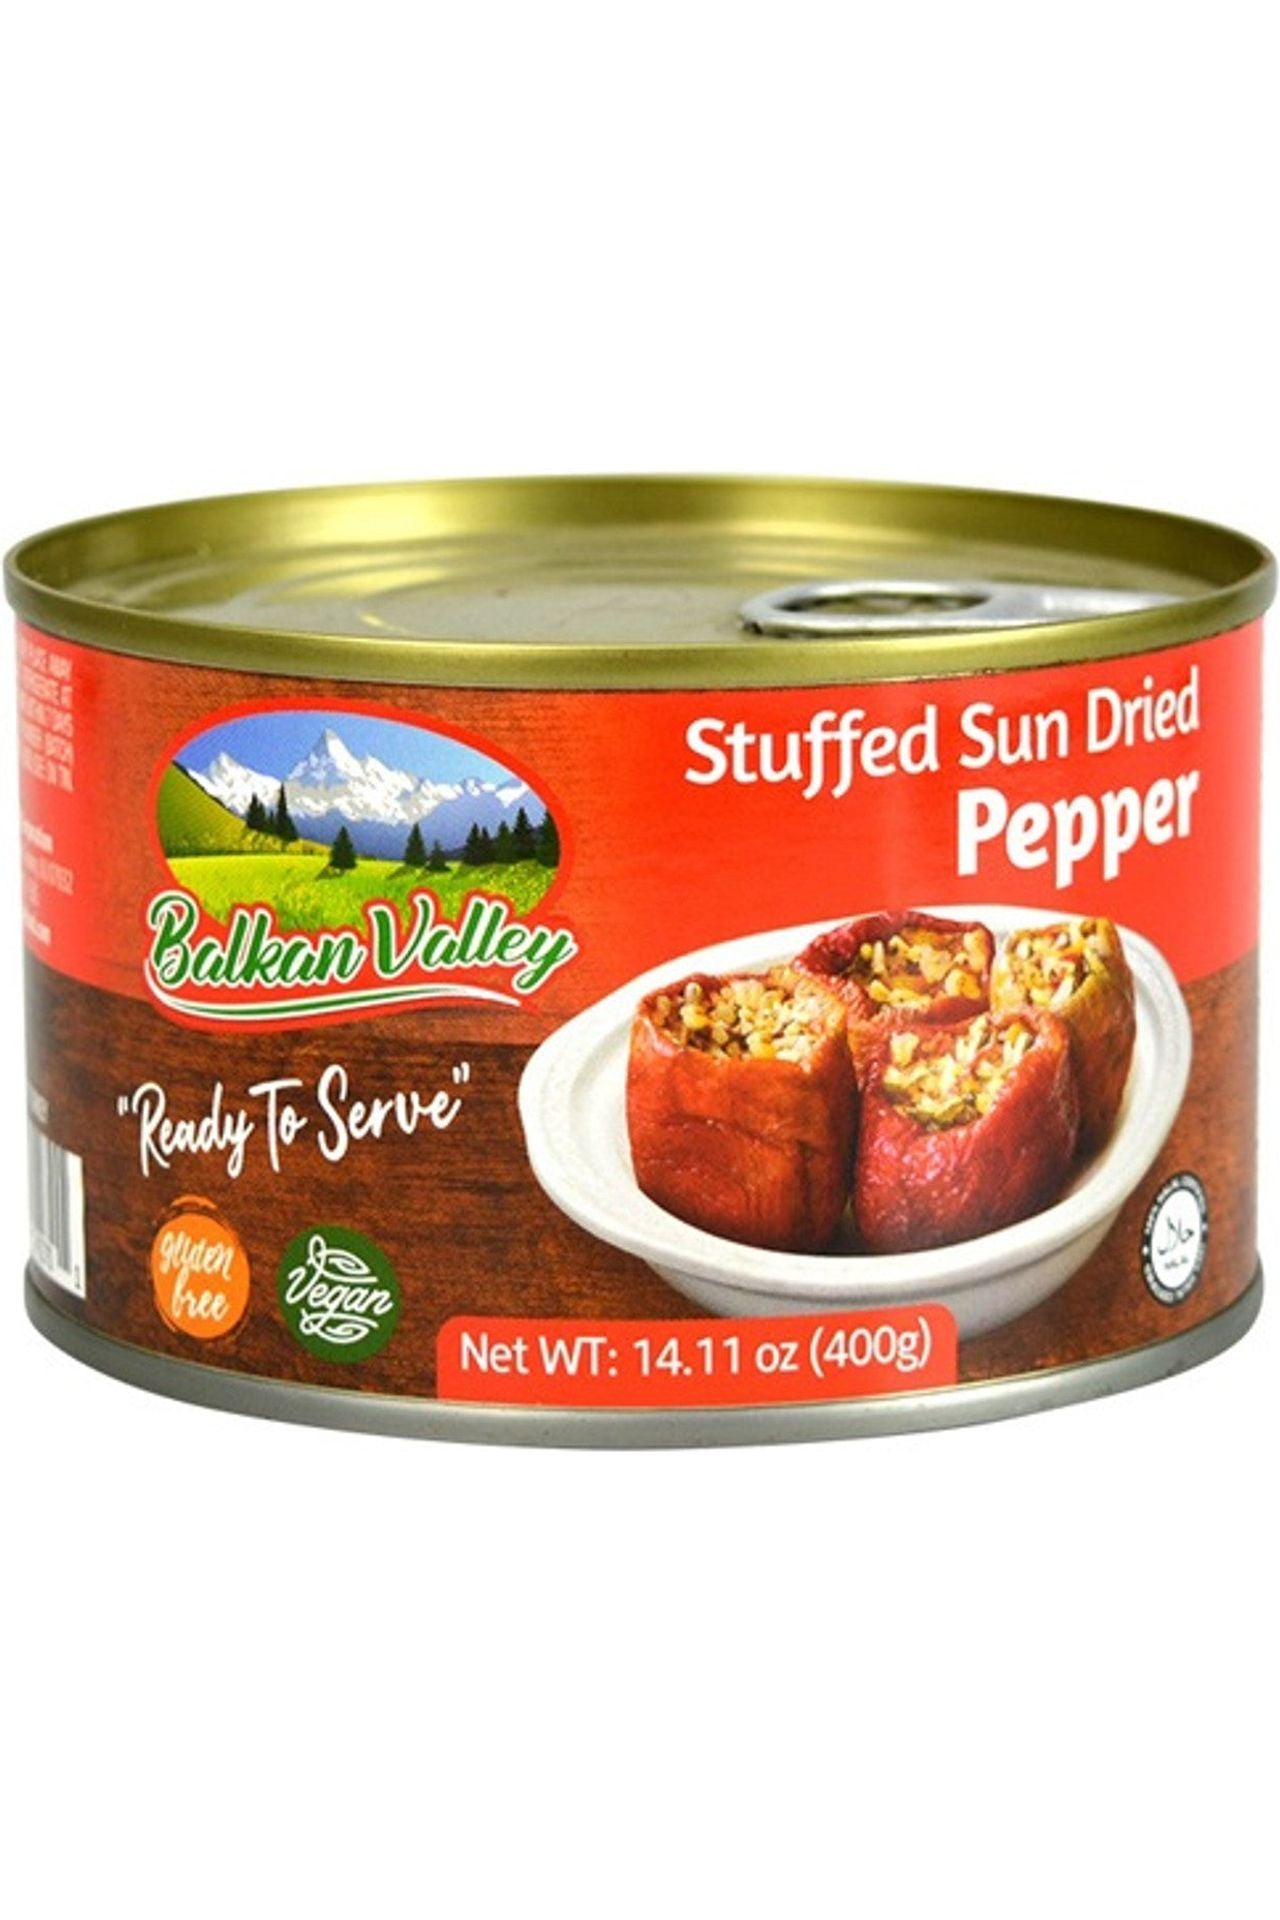 Ready to Serve - Stuffed Sun Dried Pepper - Balkan Valley